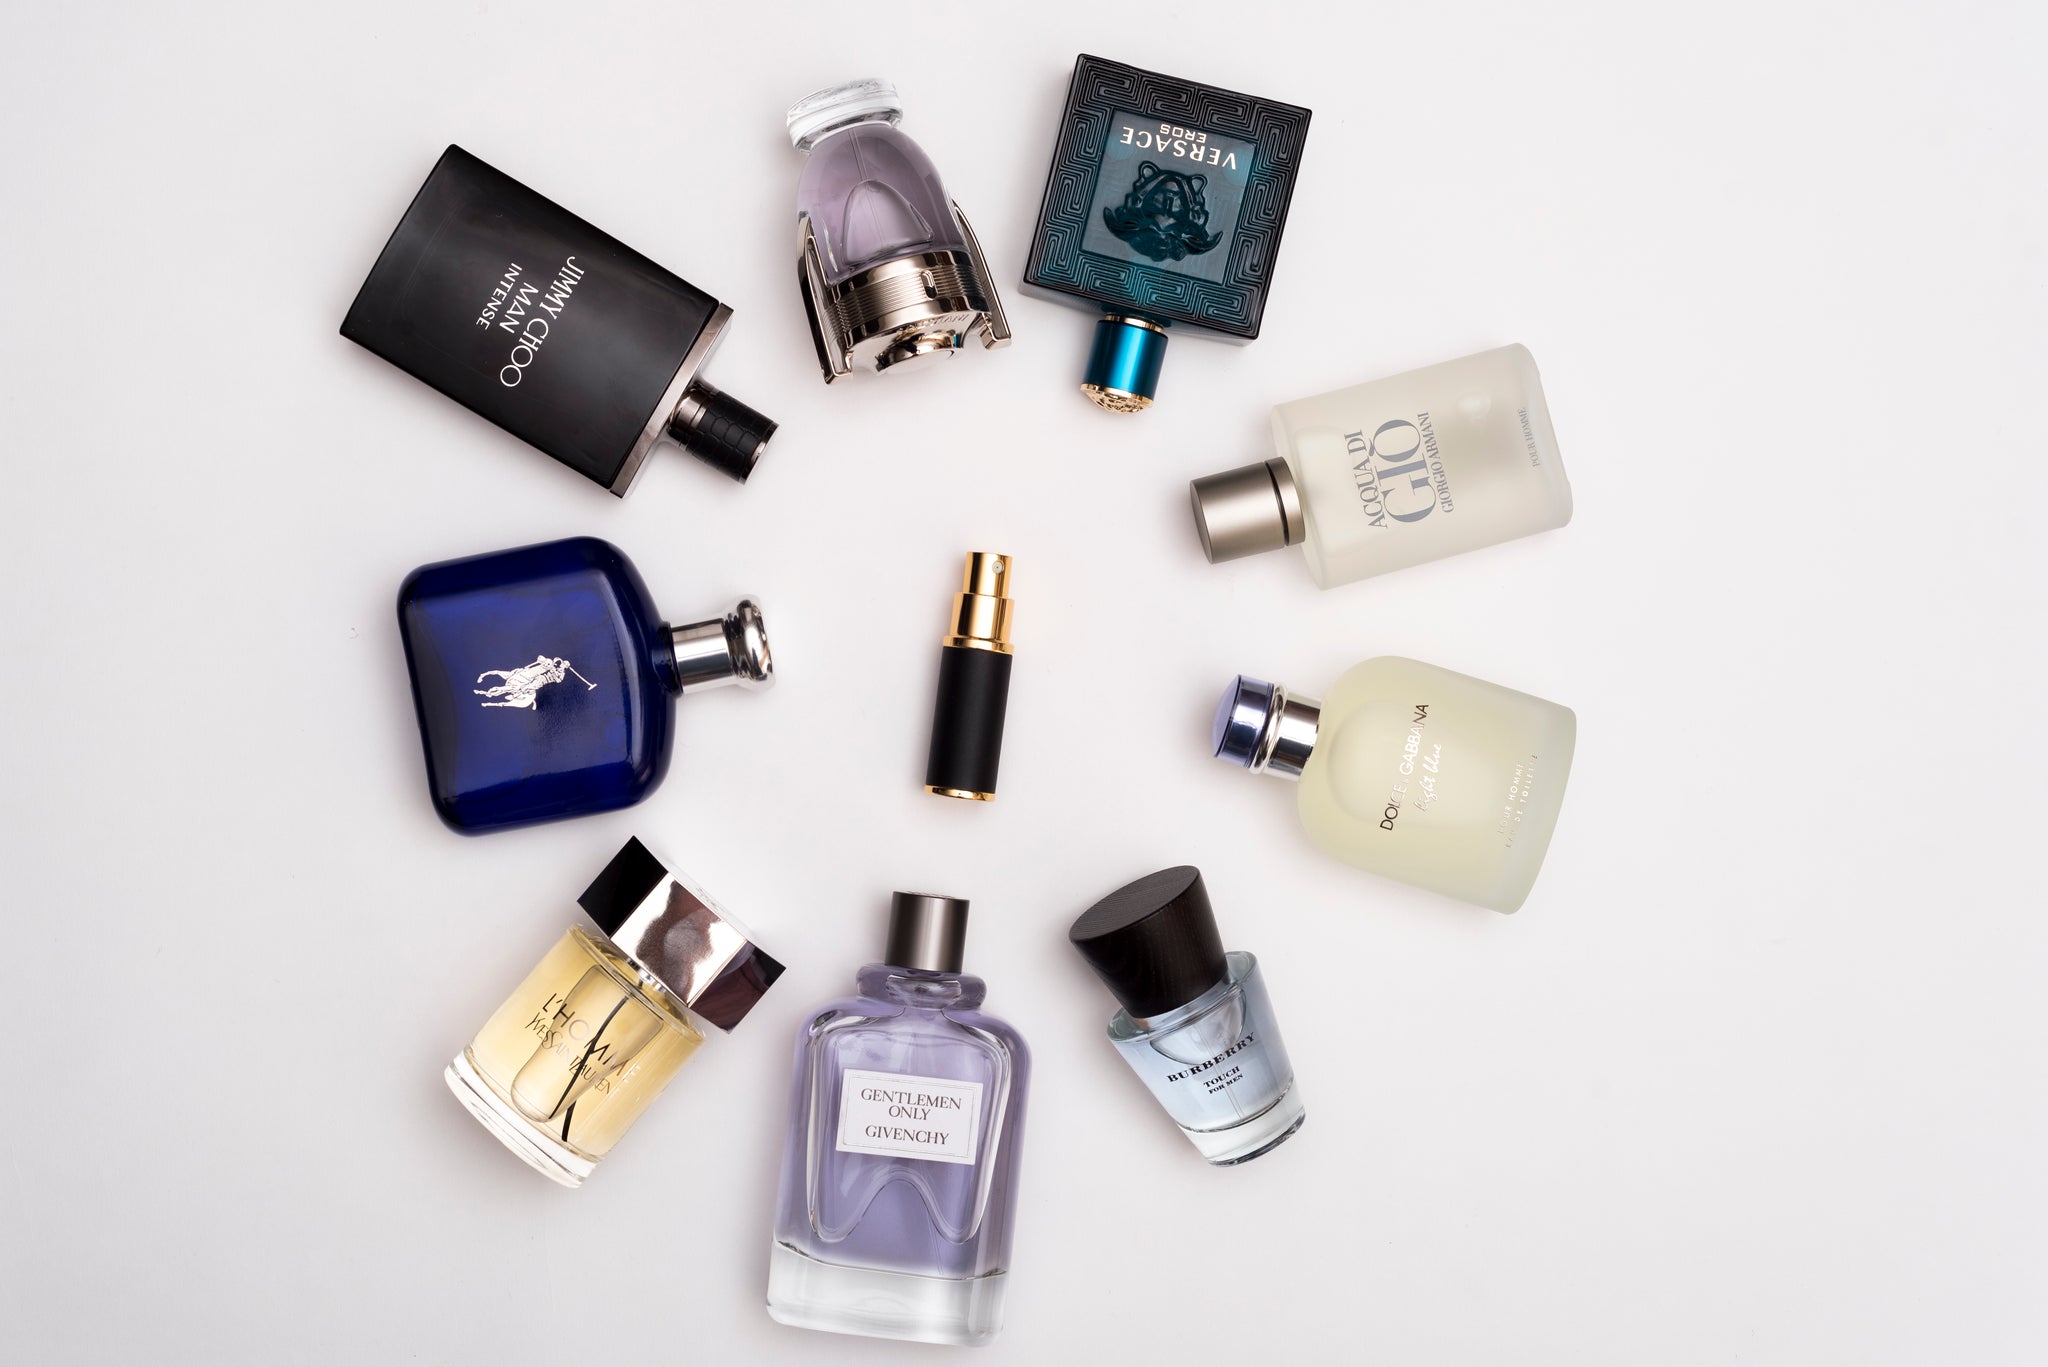 The LV fragrance club~